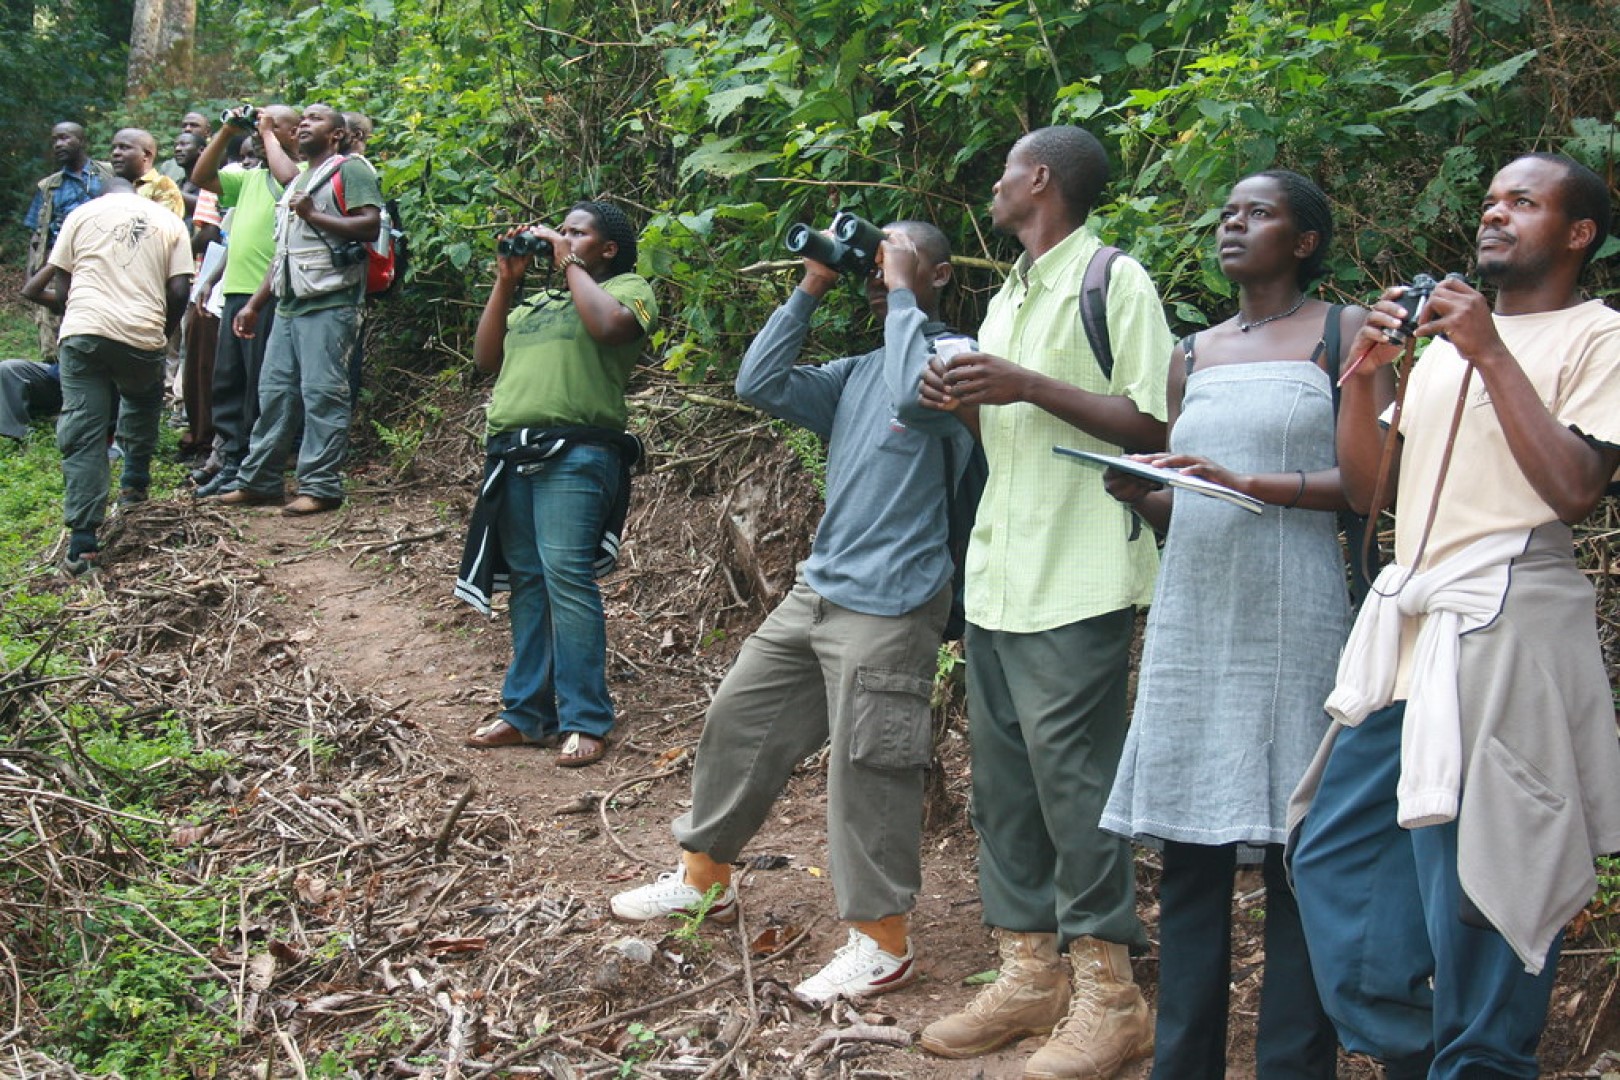 A birdwatching study trip in Kibale National Park